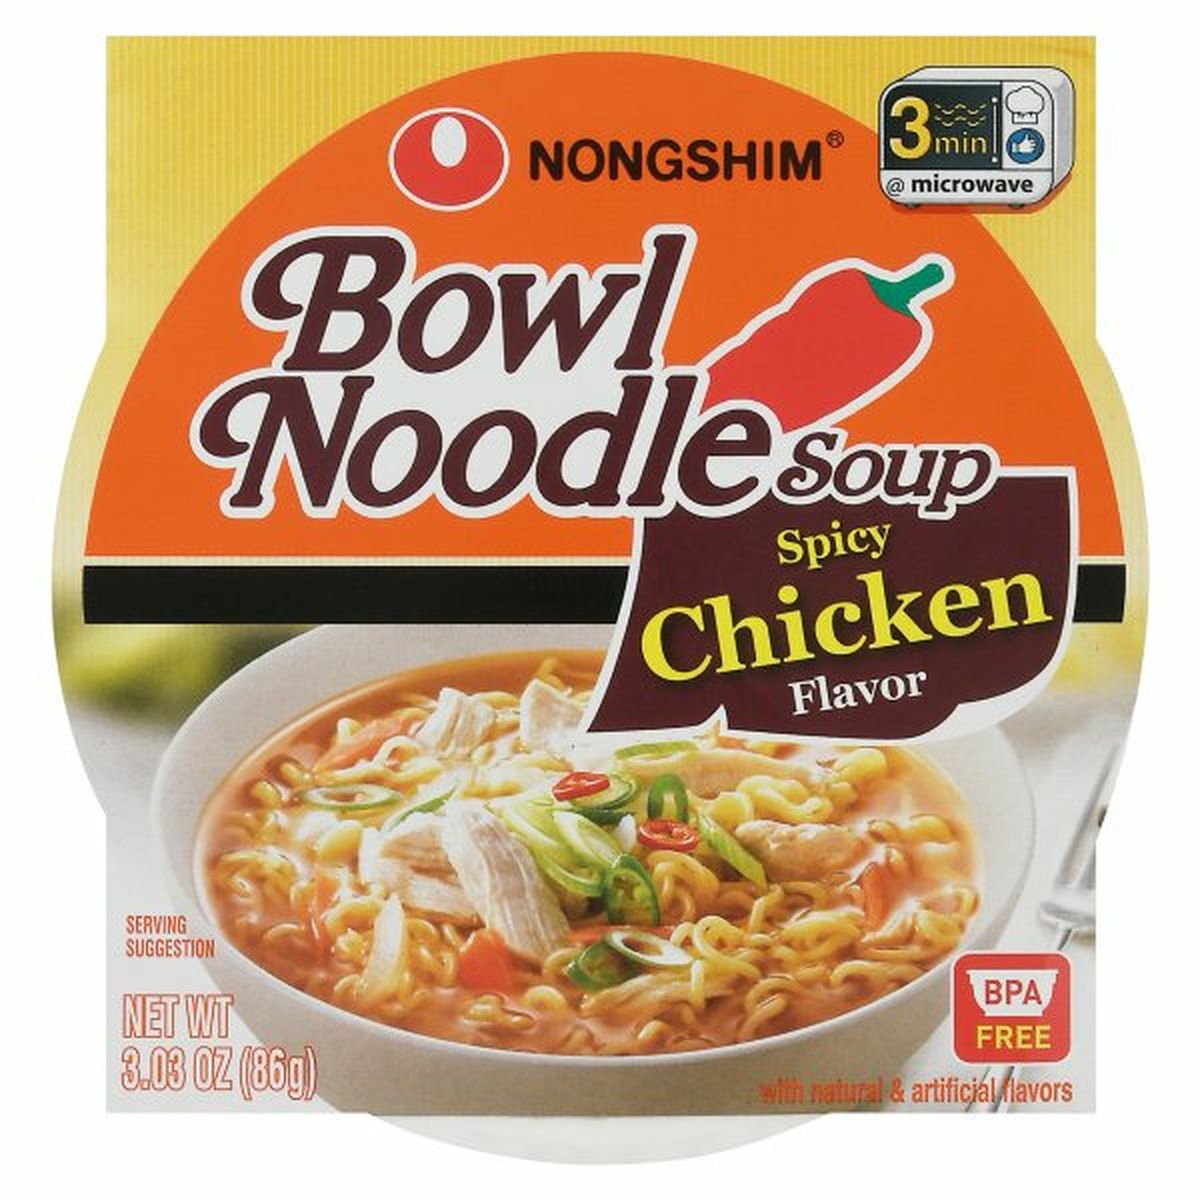 Calories in Nongshim Bowl Noodle Soup, Spicy Chicken Flavor